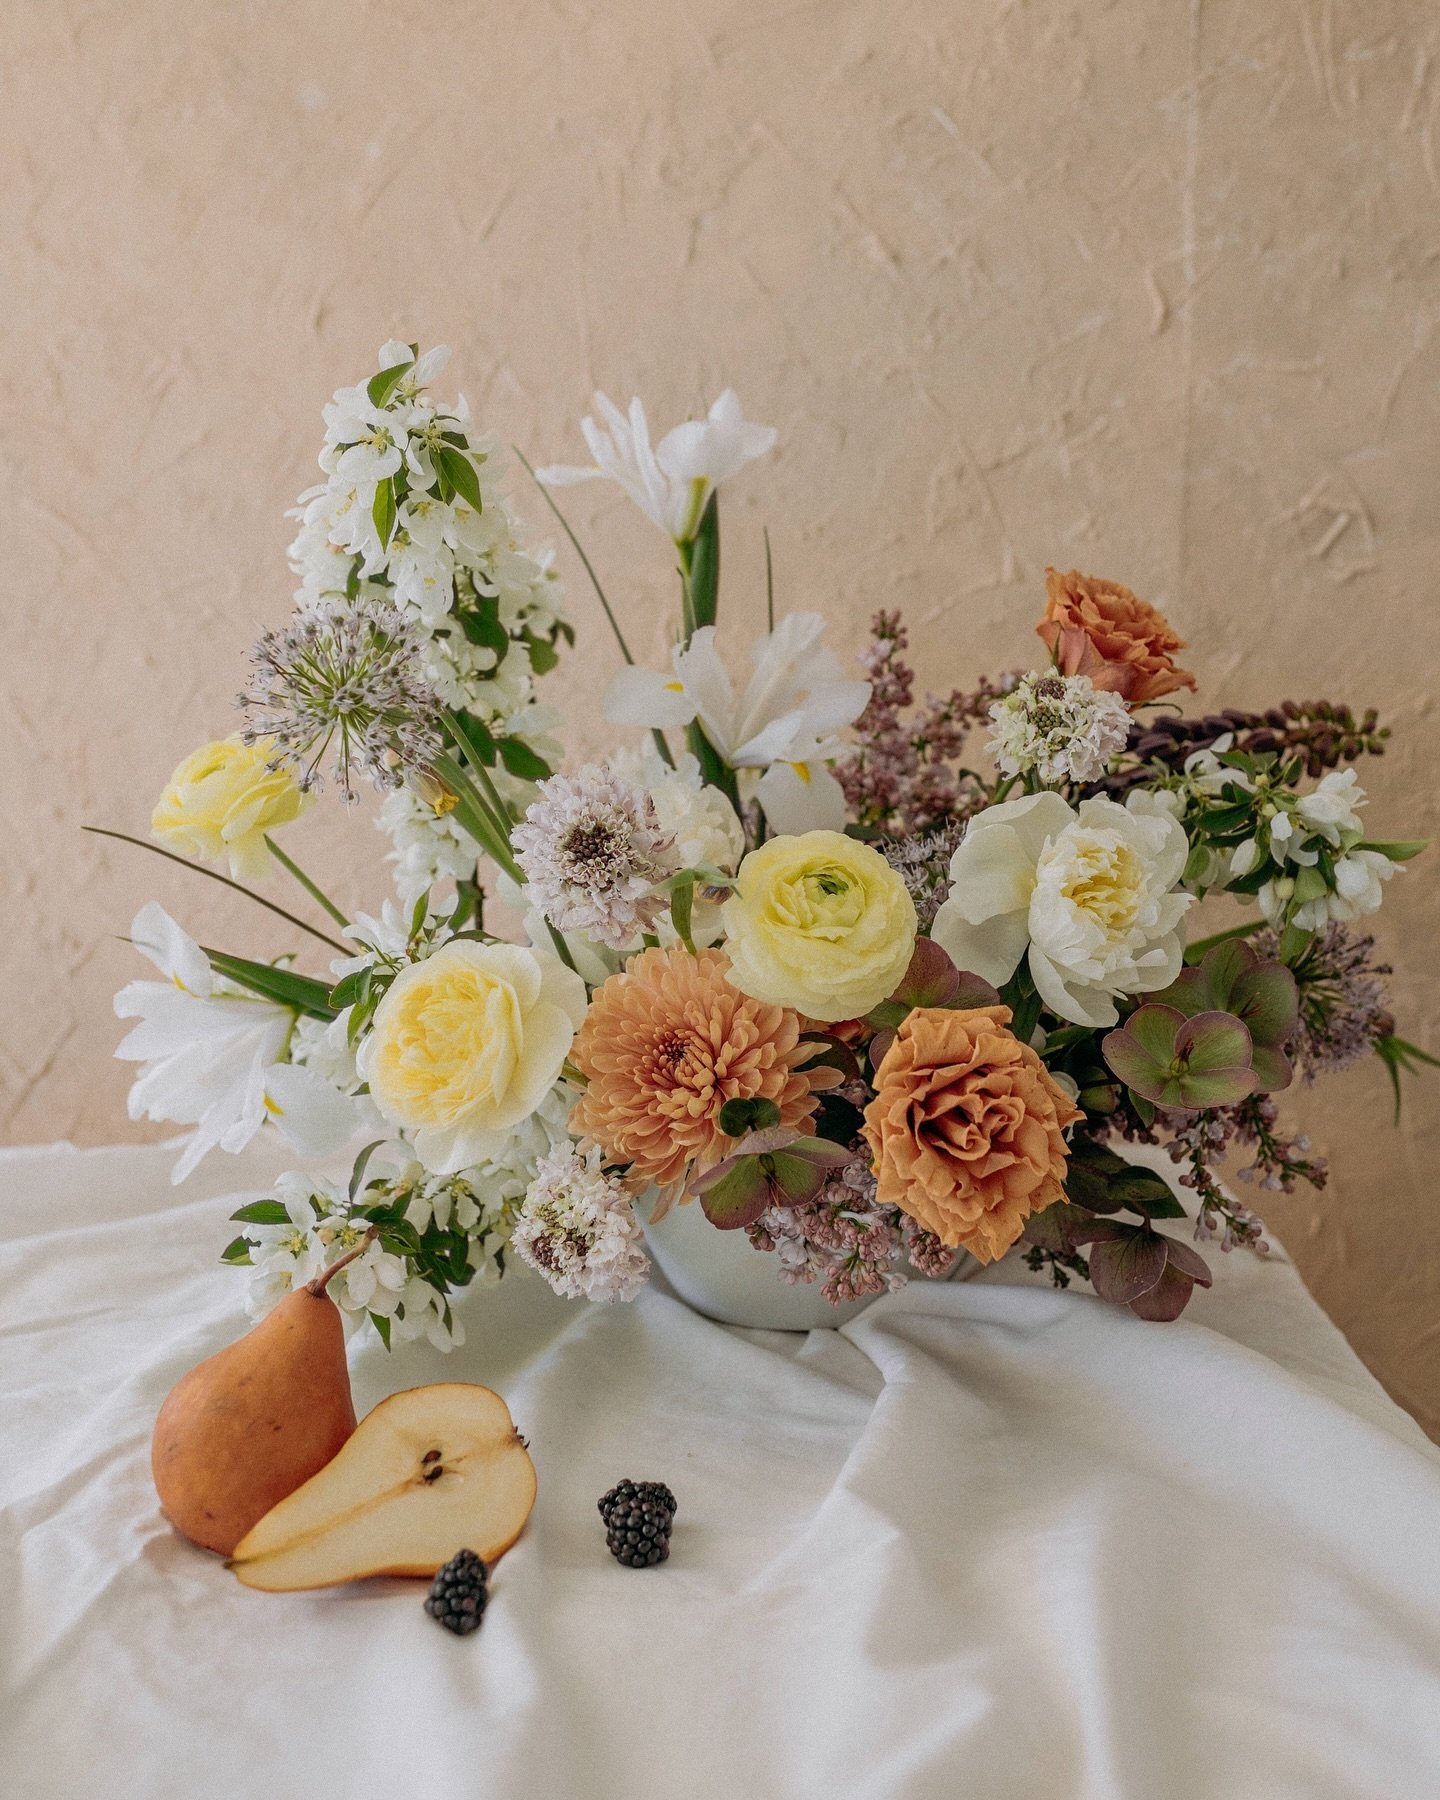 Spring Flourish ✨🤍🪻 Pt. I 

Photography: @taybenedicktphoto 

Keywords: Tahoe, Wedding, Florist, Truckee, Spring, Flowers, Reno, Nevada

#tahoeweddingflorist #tahoeflorist #laketahoeflorist #truckeeweddingflorist #truckeeflorist #weddingflowers #ch